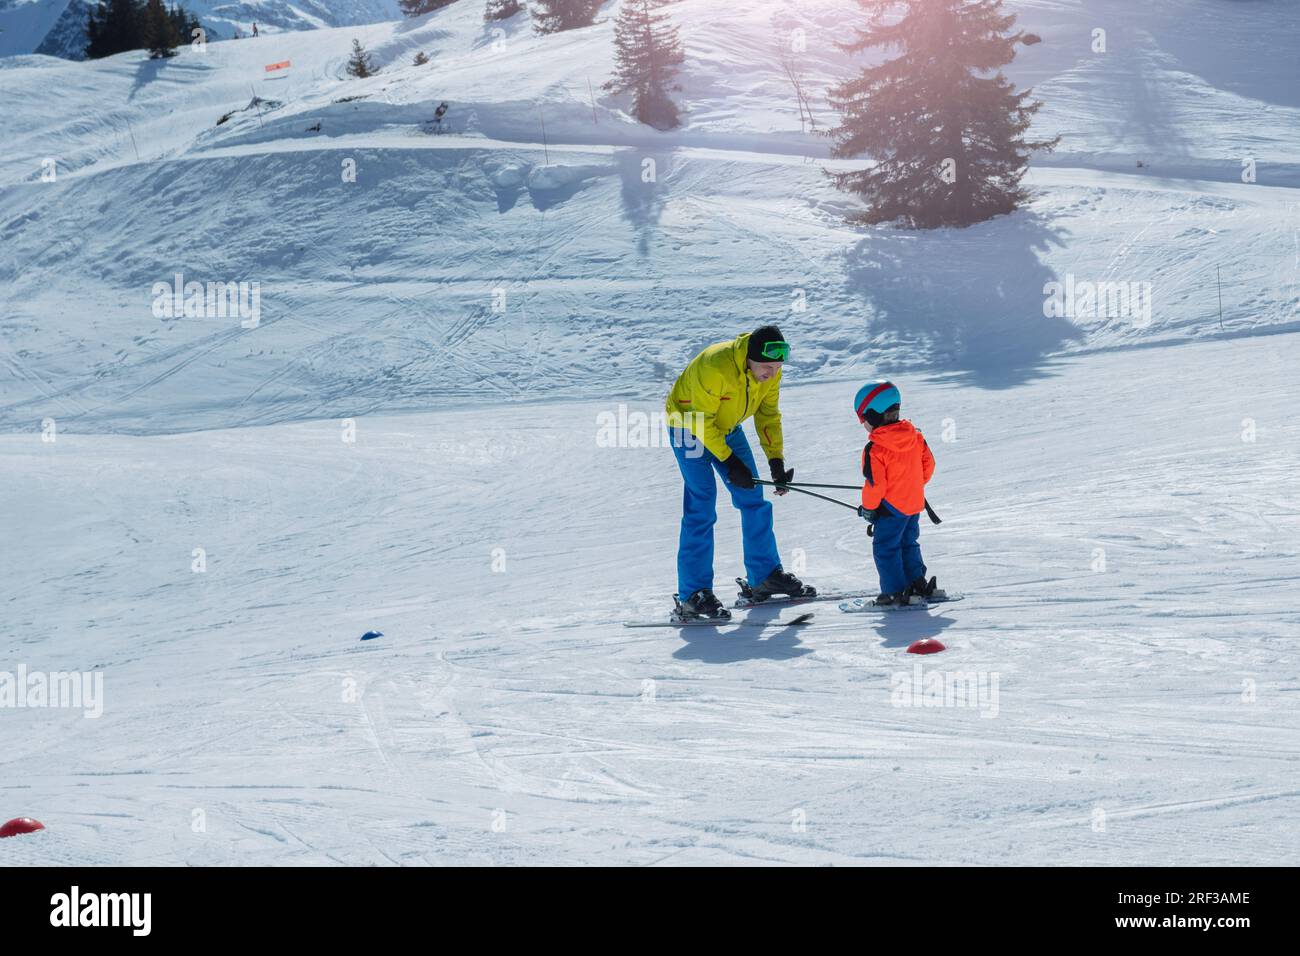 Dad glide backwards teaching little child to ski using poles Stock Photo